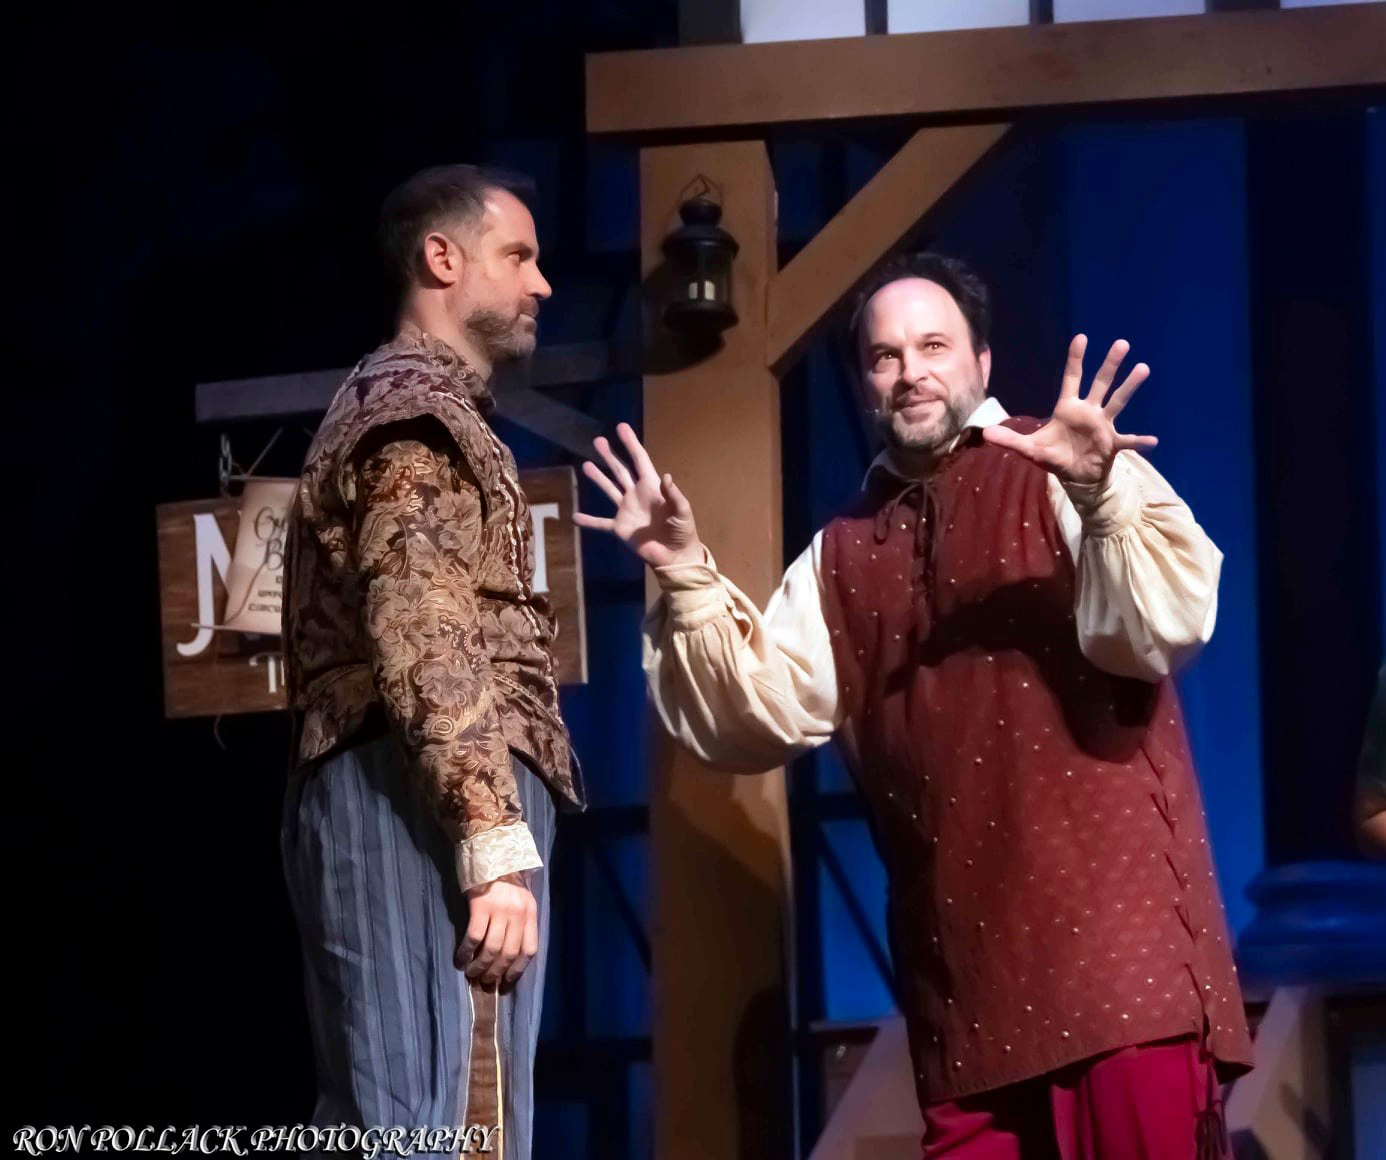 Ben Sandomir as Nick Bottom and Matthew Korinko as Nostradamus (Photo by Ron Pollack)